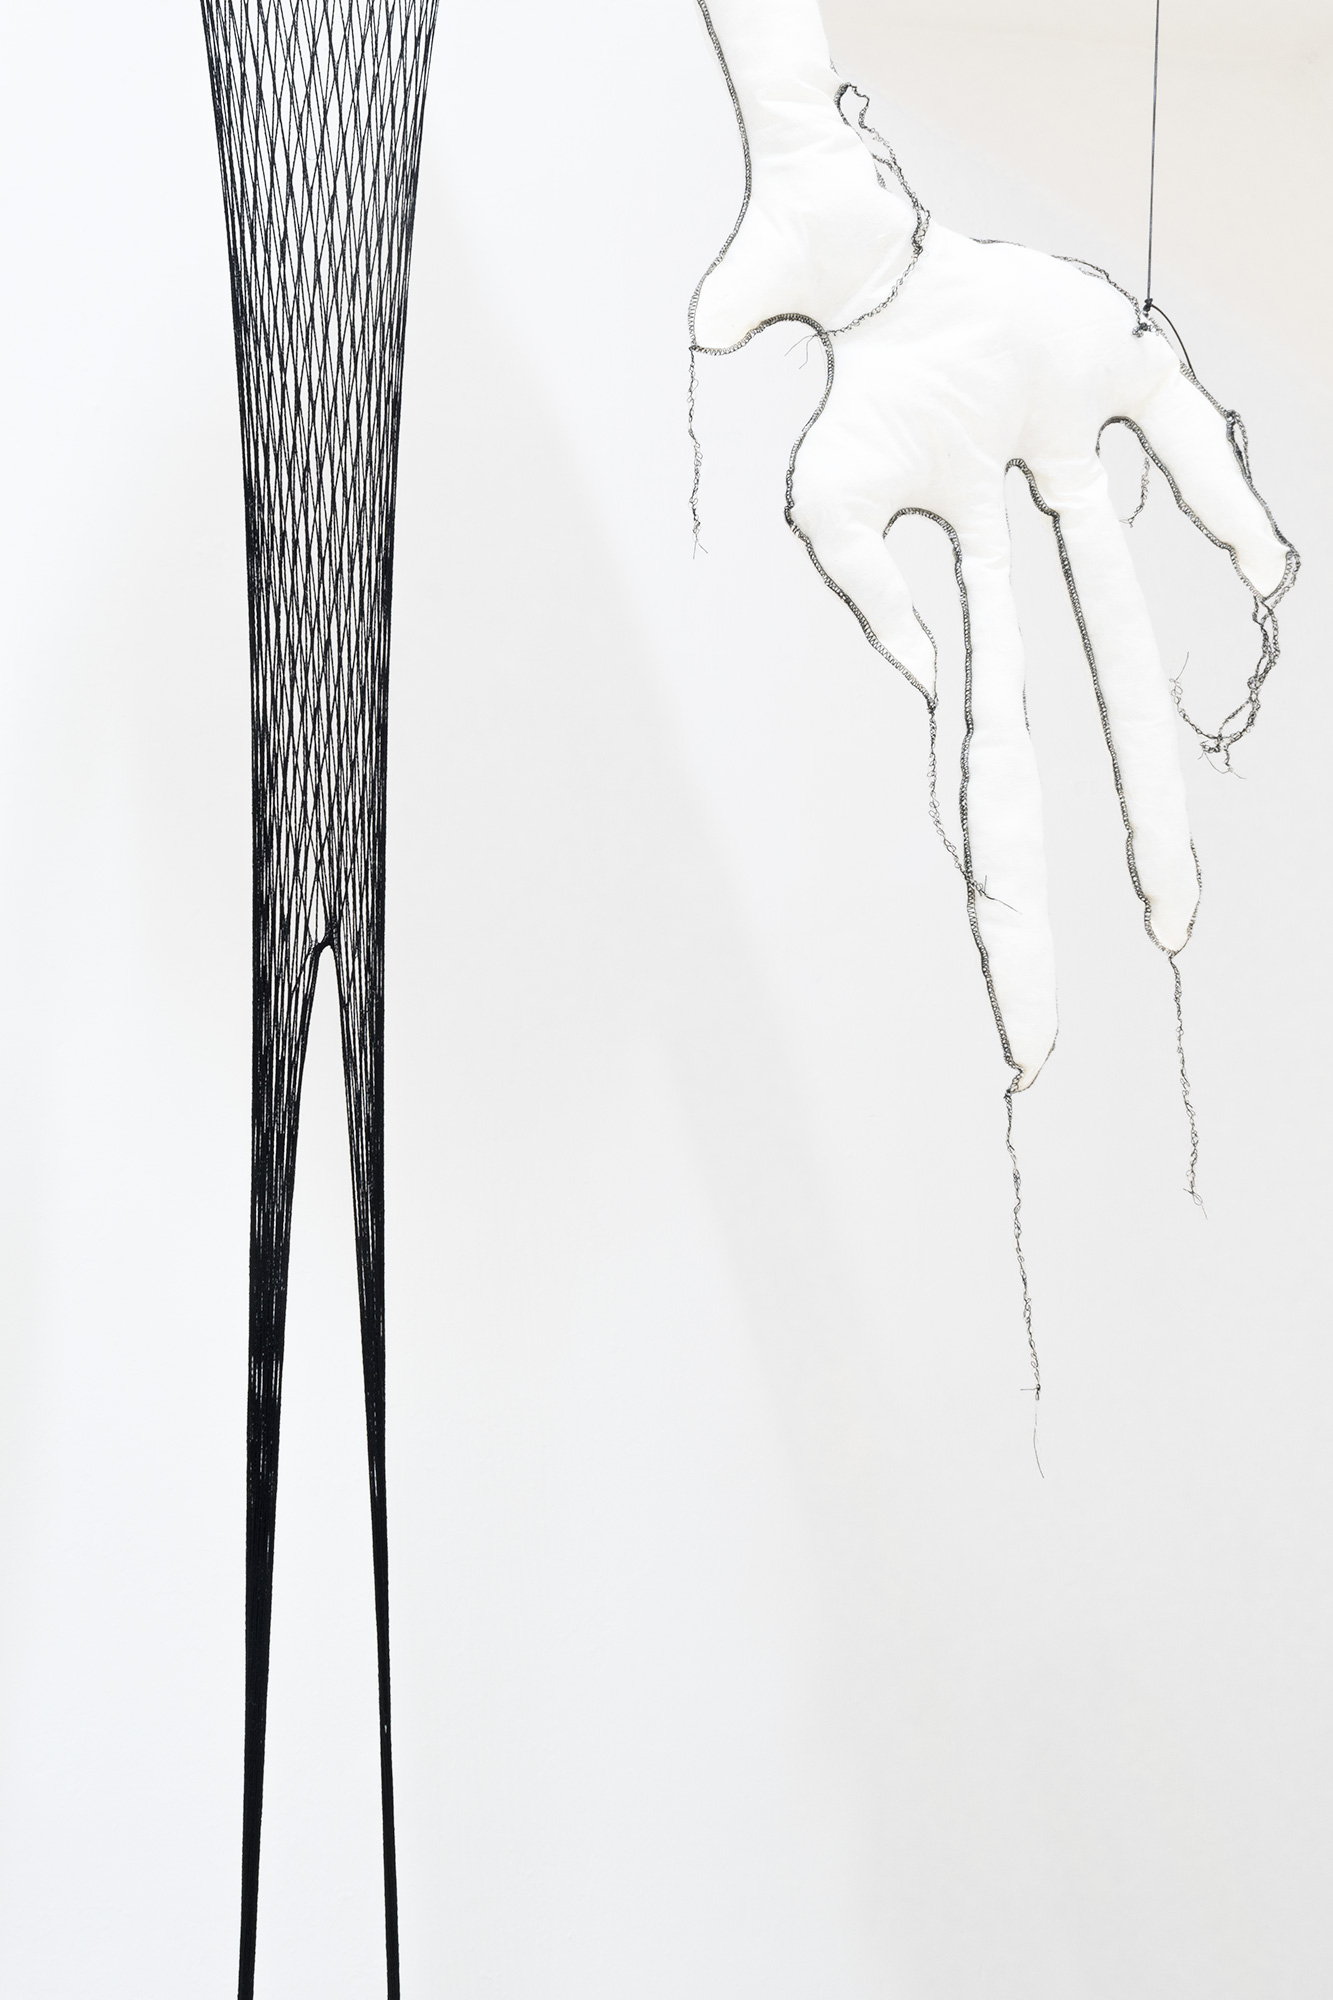 Mariantonietta Bagliato, Avatāra, 2018, tessuto, imbottitura, ricamo. Set di tre pezzi, varie dimensioni (dettaglio).